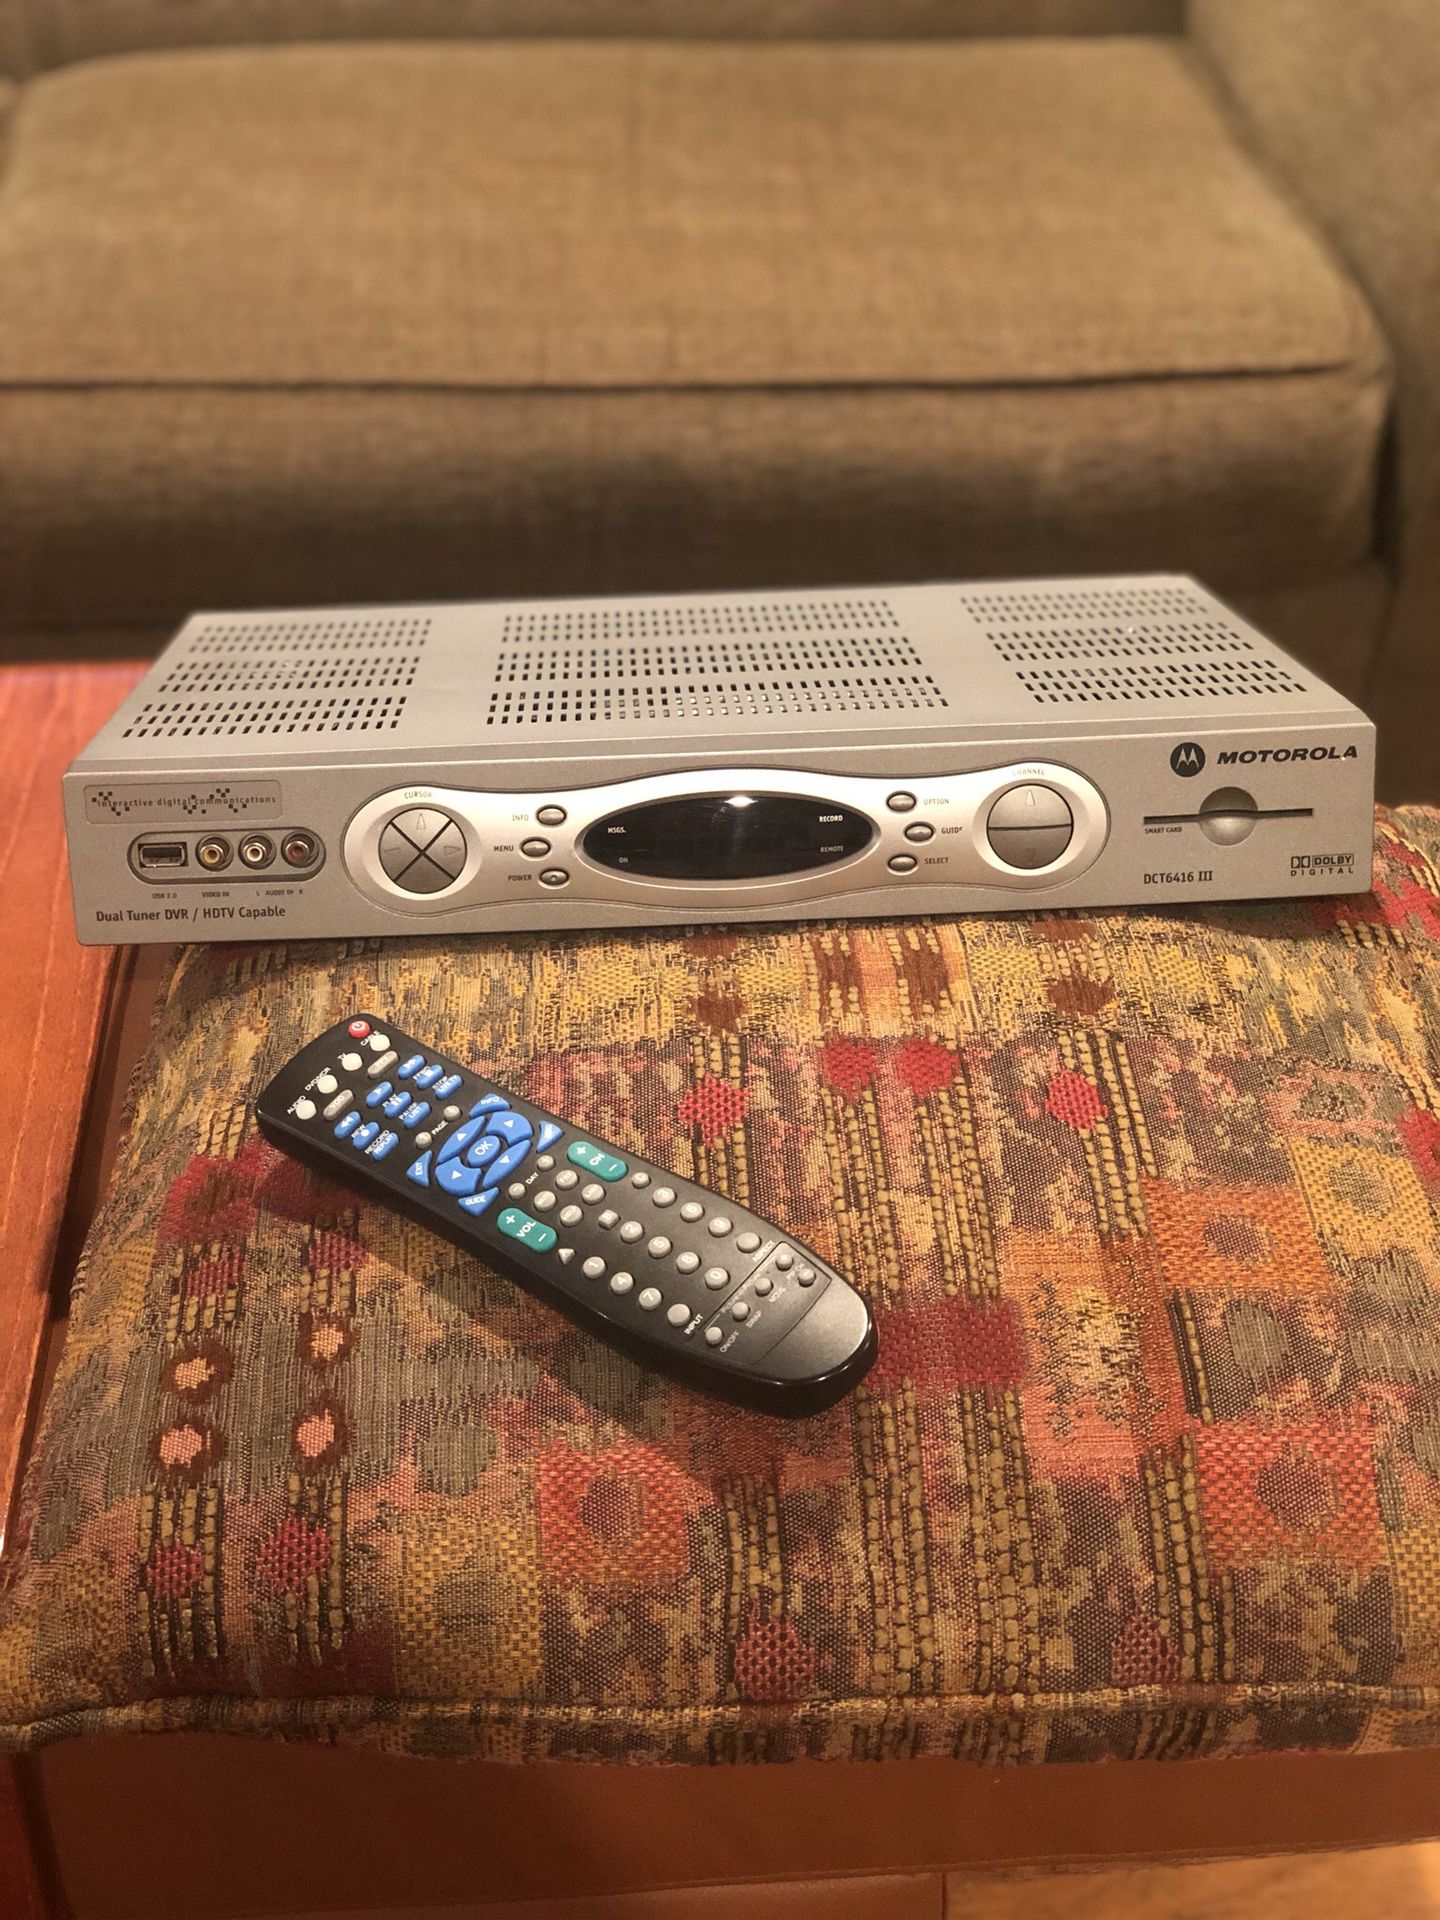 Motorola DVR with remote